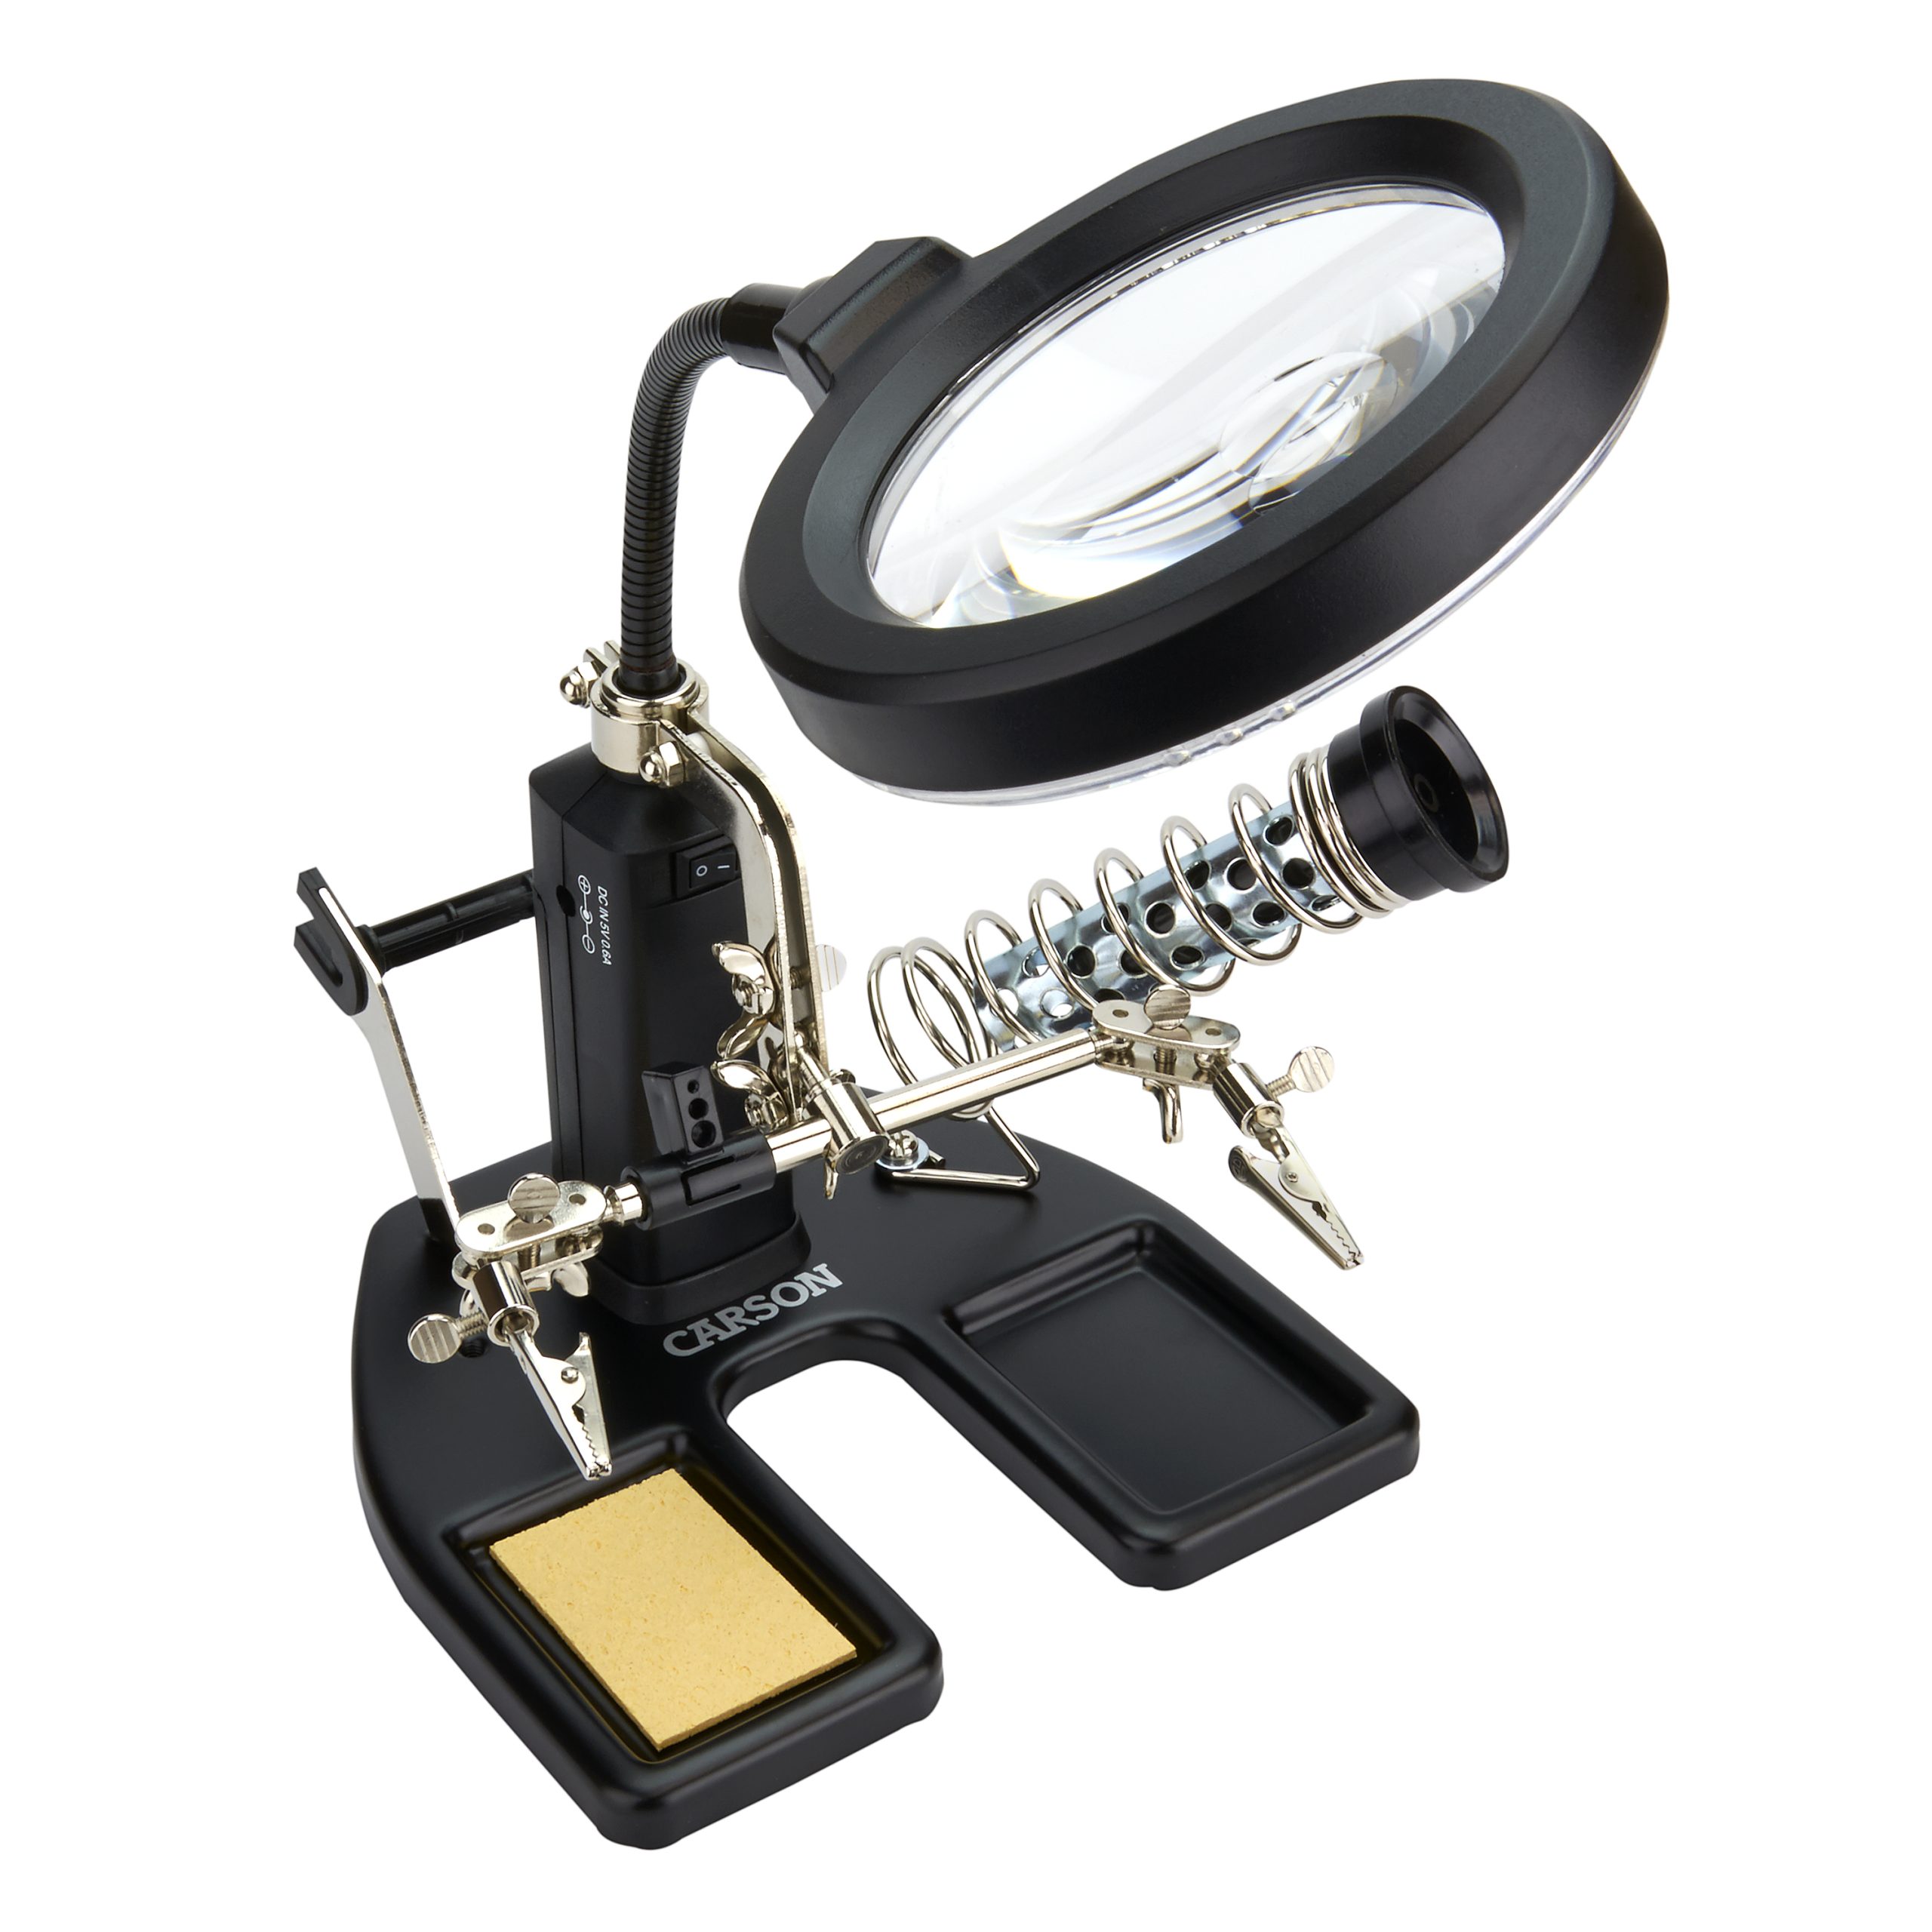 Carson Optical Ol-57 OcuLens Magnifier